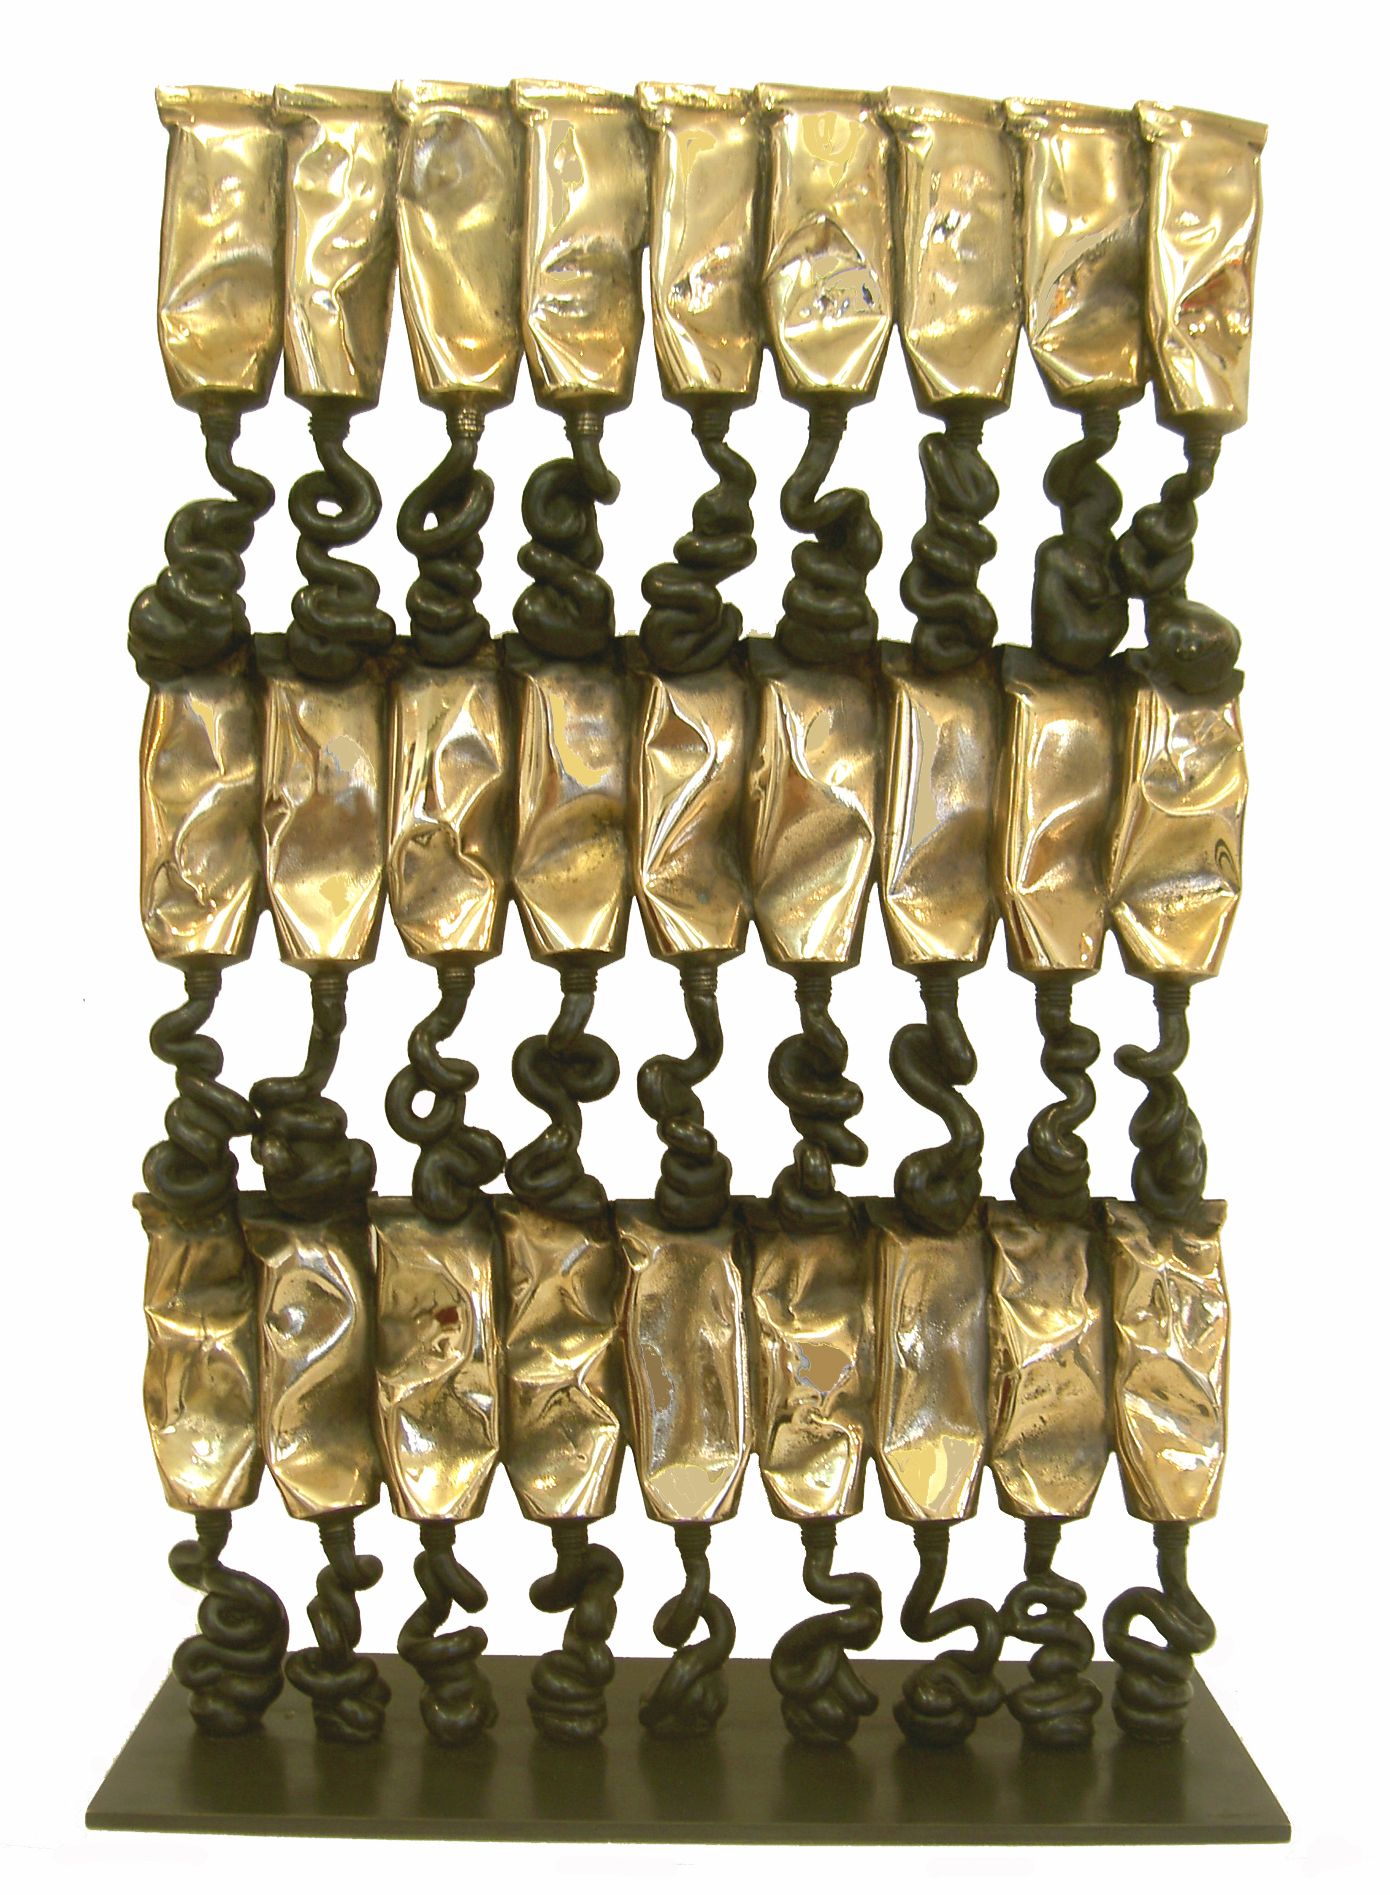 Null 阿尔曼(1928-2005)

对牛顿的挑战, 2004

双层黑色和金色铜锈的青铜，有签名和编号的有100+XXX份 44 x 30 x 12厘米
&hellip;